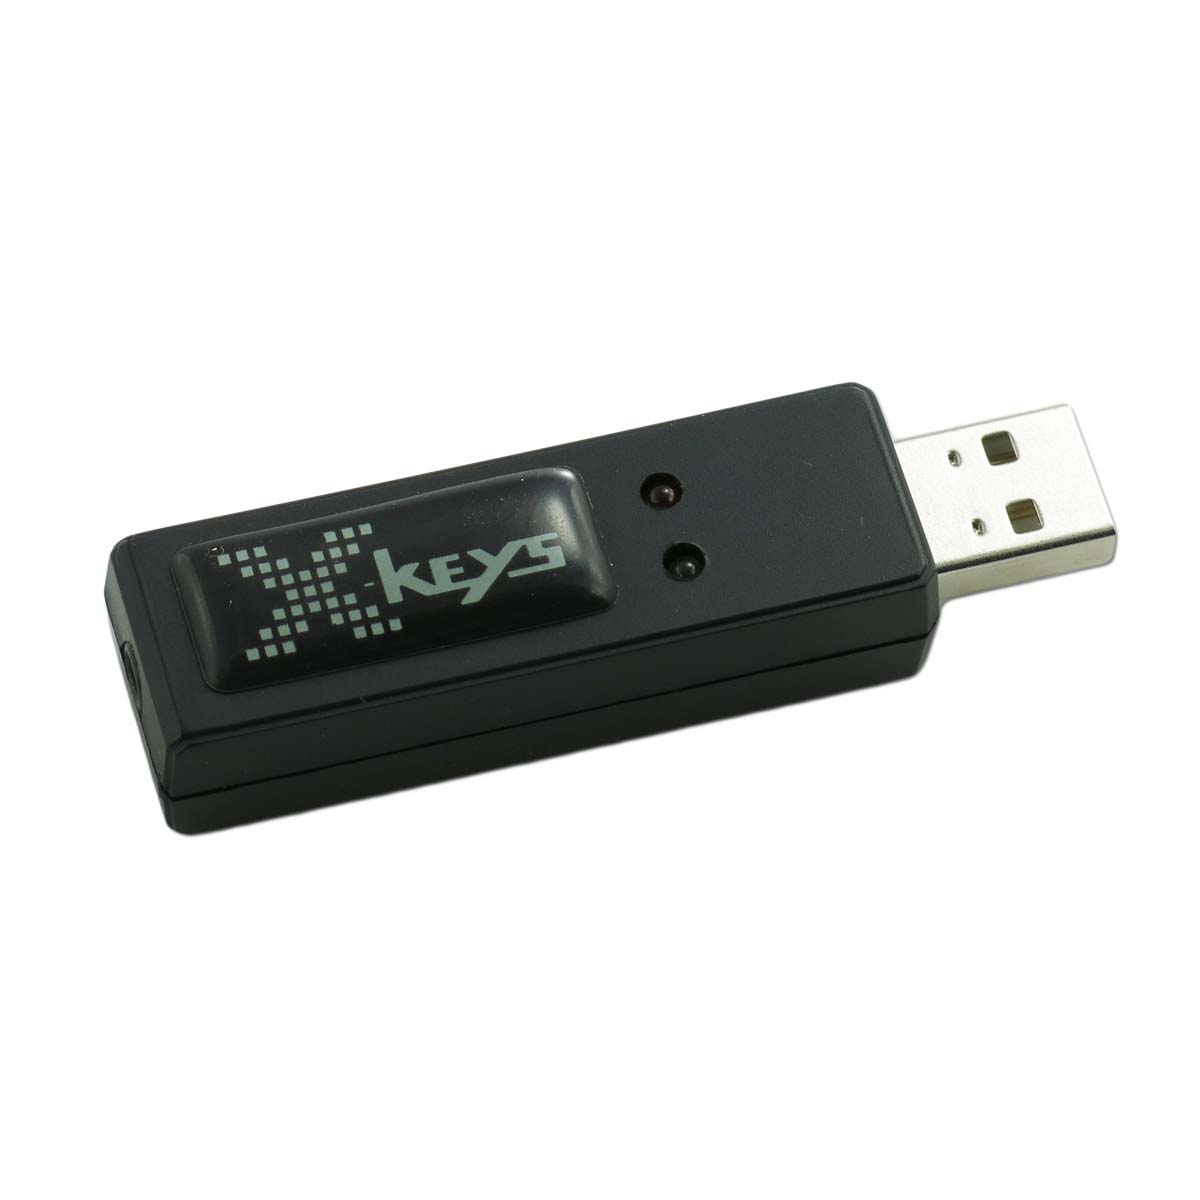 P.I. Engineering X-keys USB 3 Switch Interface X-keys®